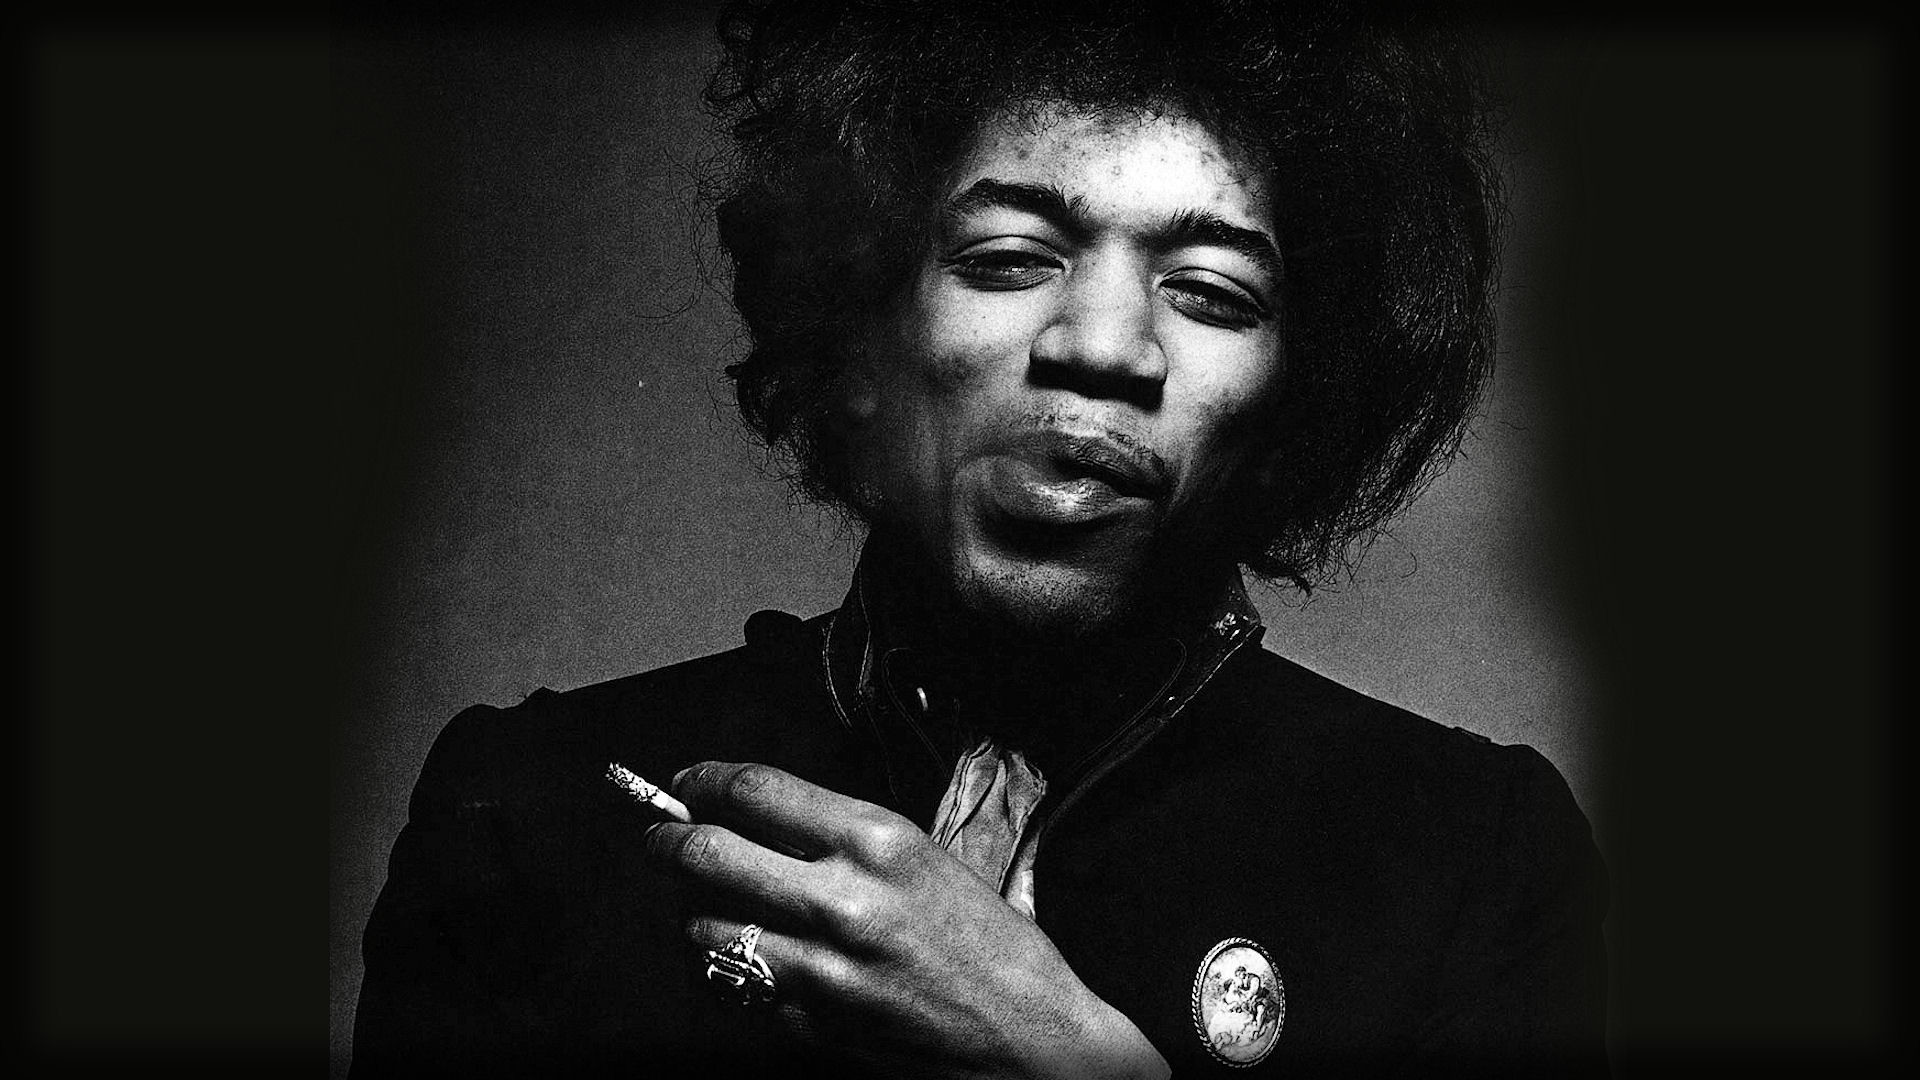 … John Lennon Wallpapers. 726 2726. Fondos De Un Nuevo Fondo HD De Jimi  Hendrix | Fondos De Pantalla De Un